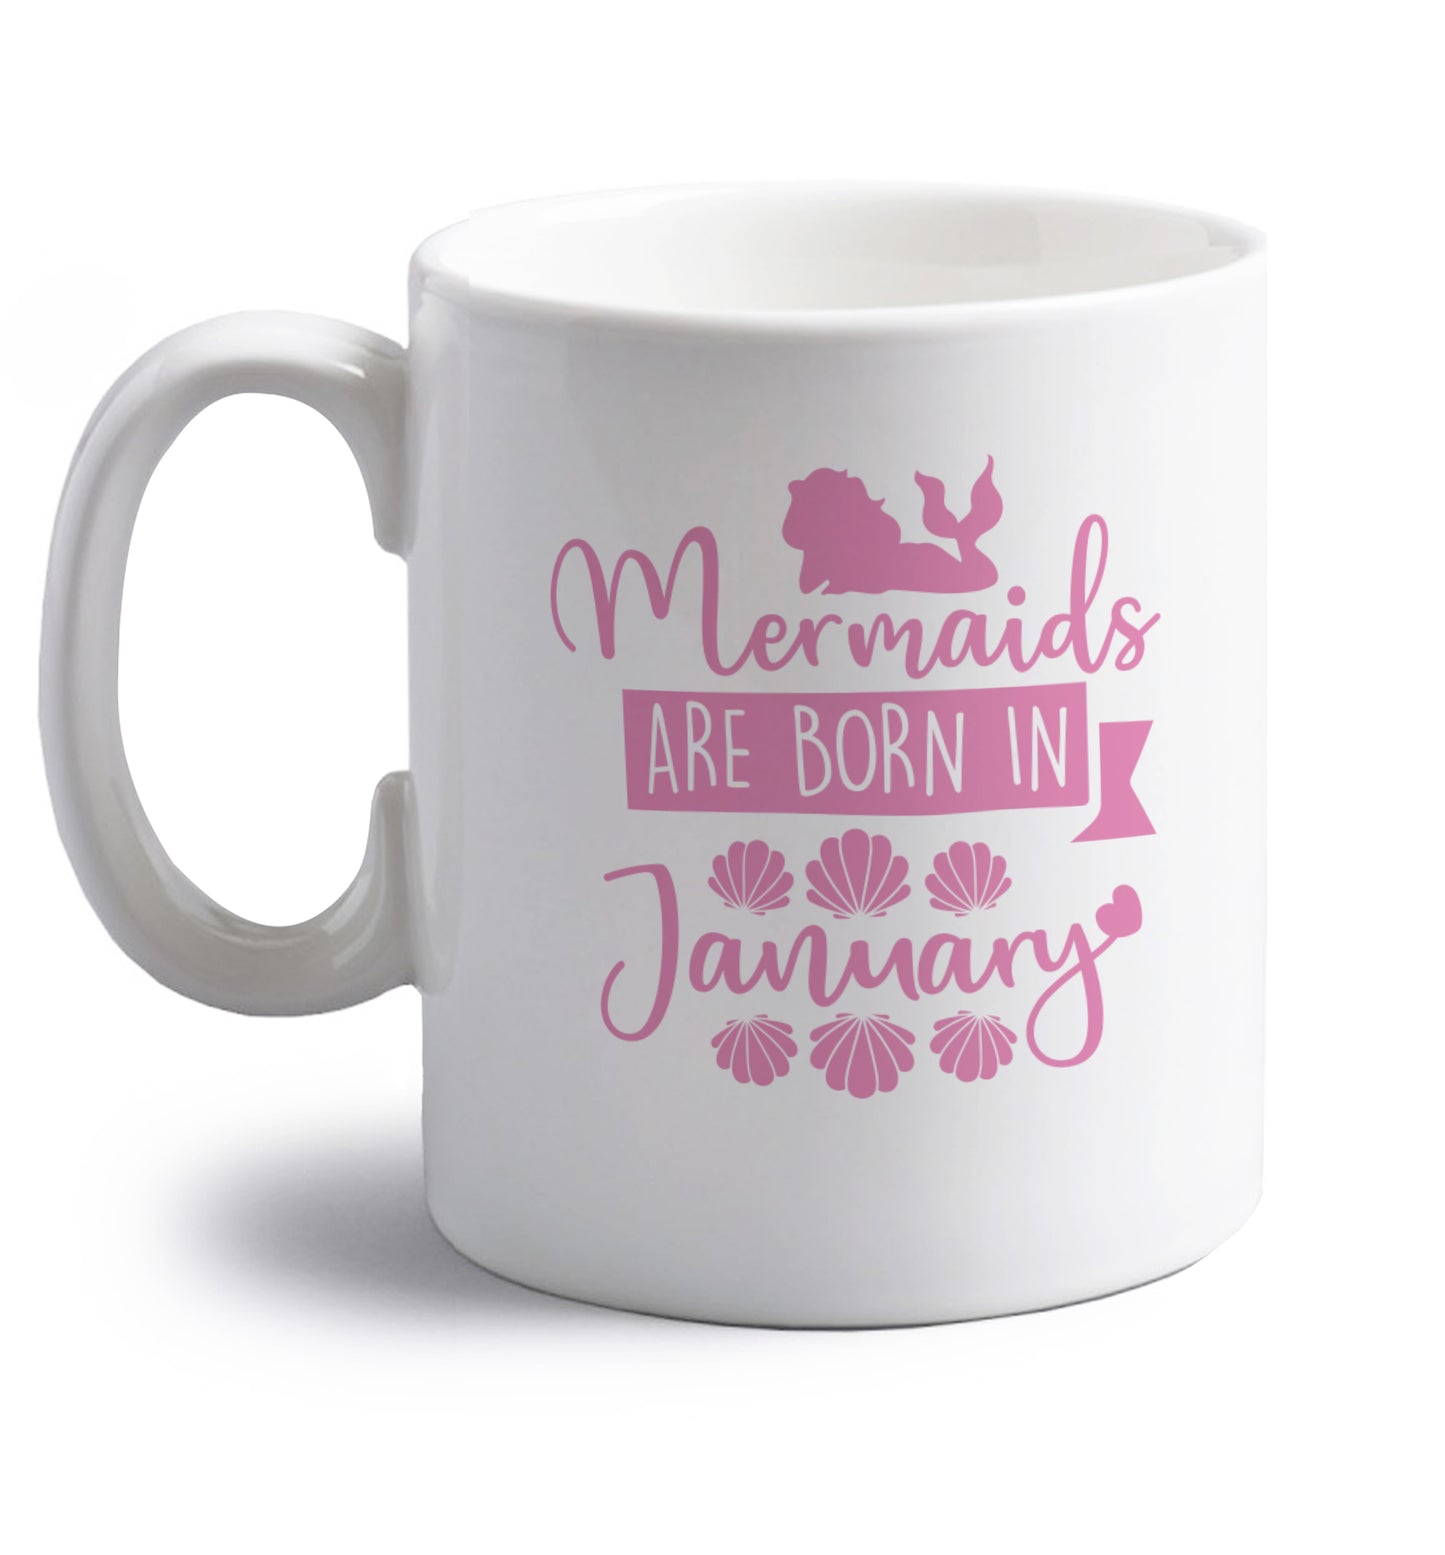 Mermaids are born in January right handed white ceramic mug 